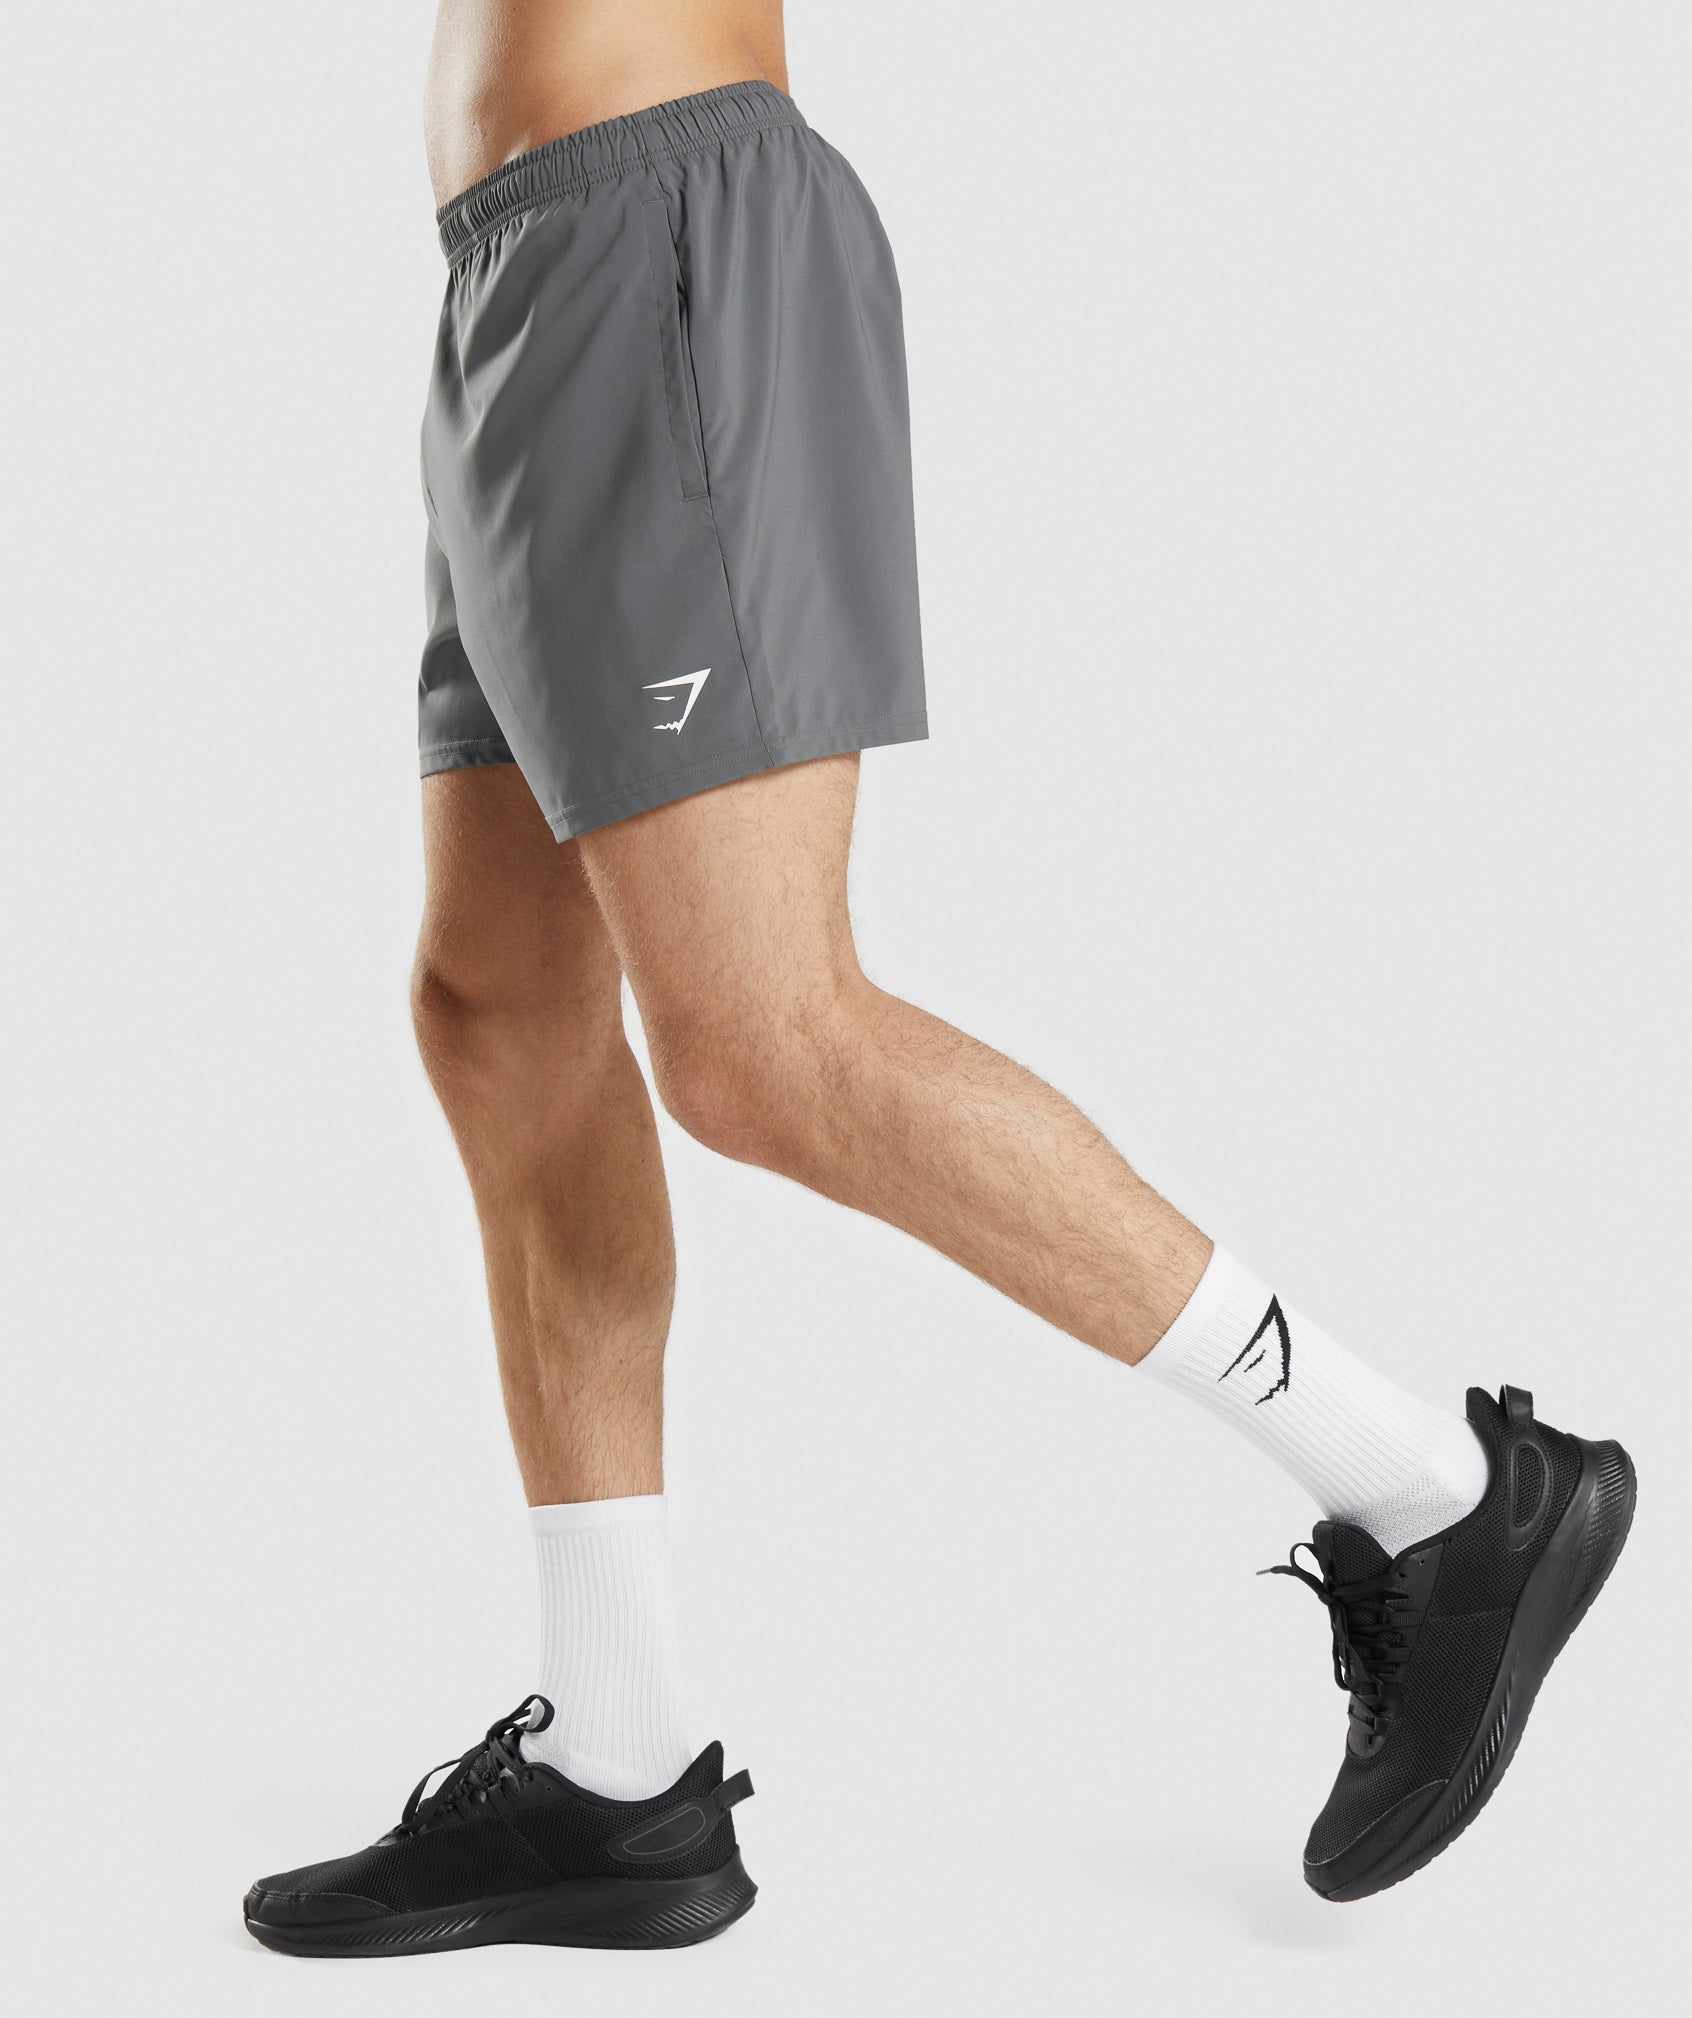 Gymshark Arrival Shorts - Charcoal Grey